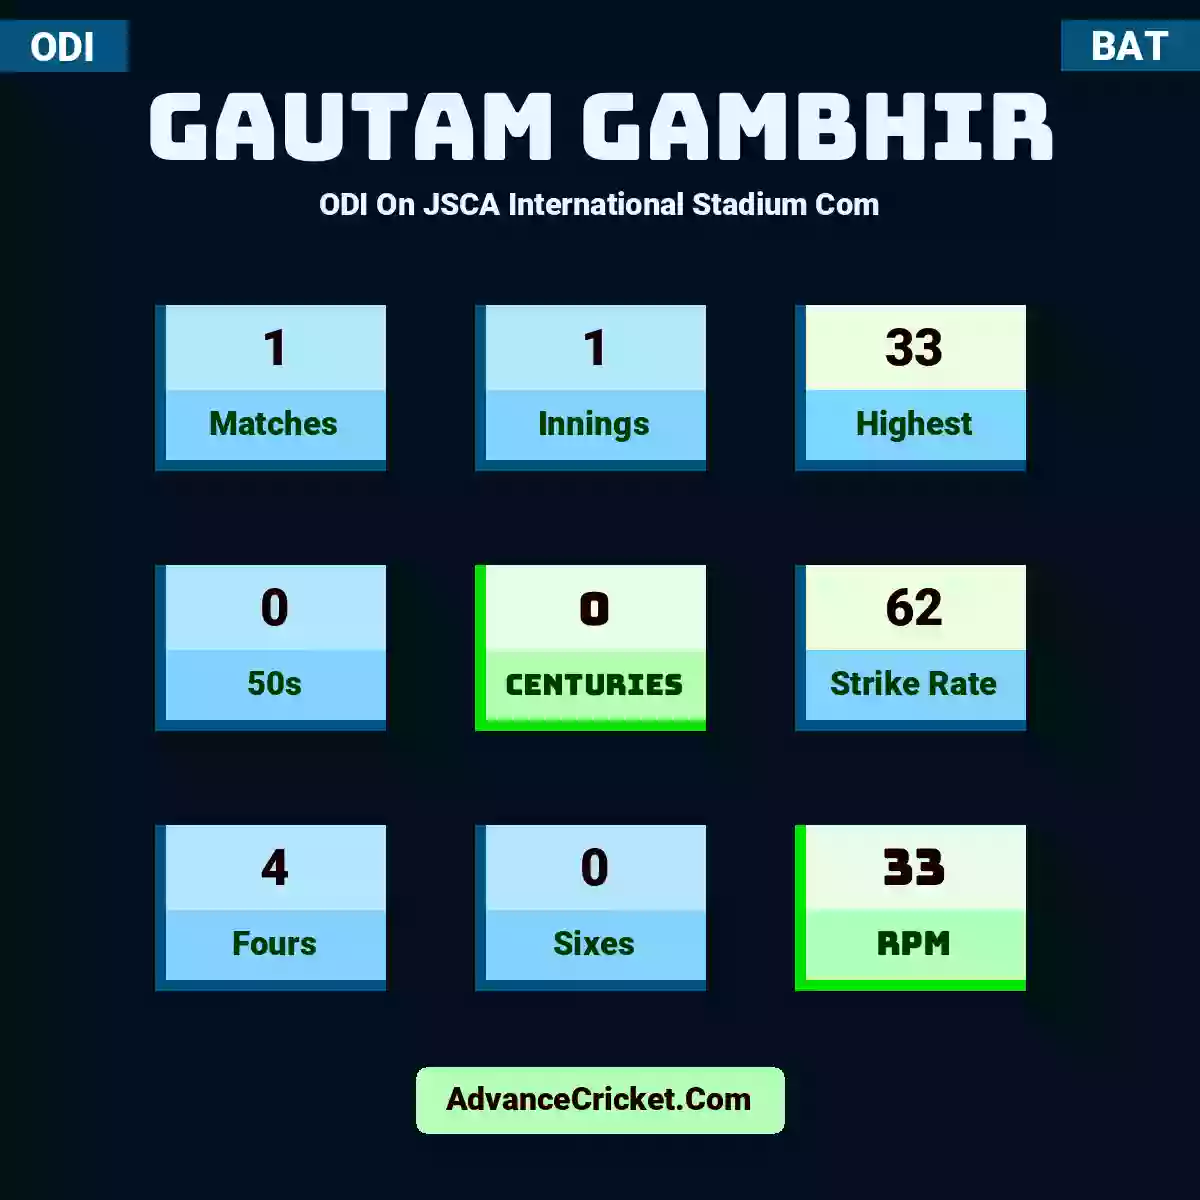 Gautam Gambhir ODI  On JSCA International Stadium Com, Gautam Gambhir played 1 matches, scored 33 runs as highest, 0 half-centuries, and 0 centuries, with a strike rate of 62. G.Gambhir hit 4 fours and 0 sixes, with an RPM of 33.